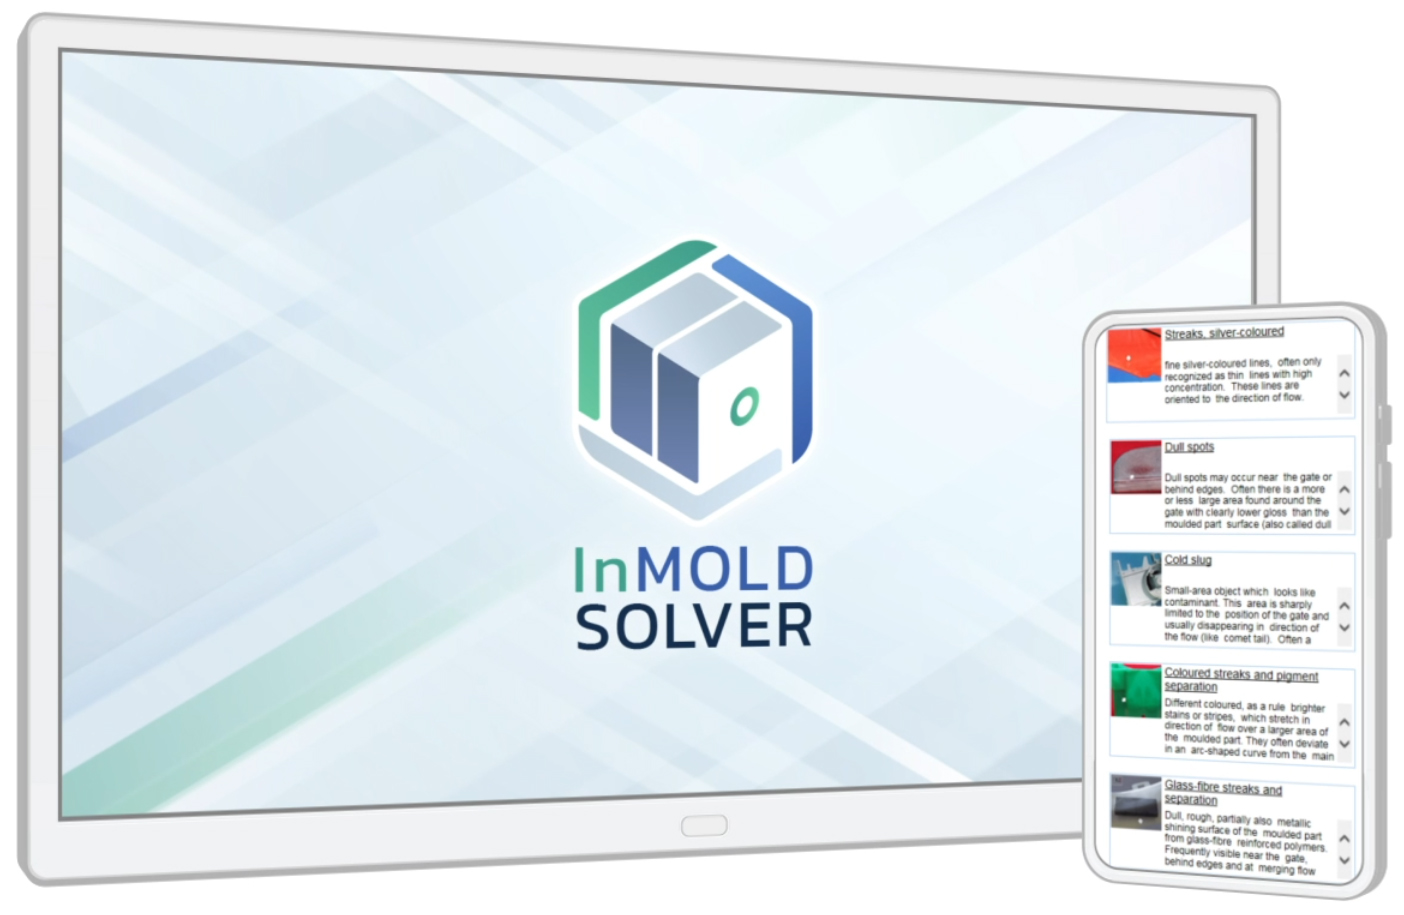 InMold Solver - Kunststoffbranche